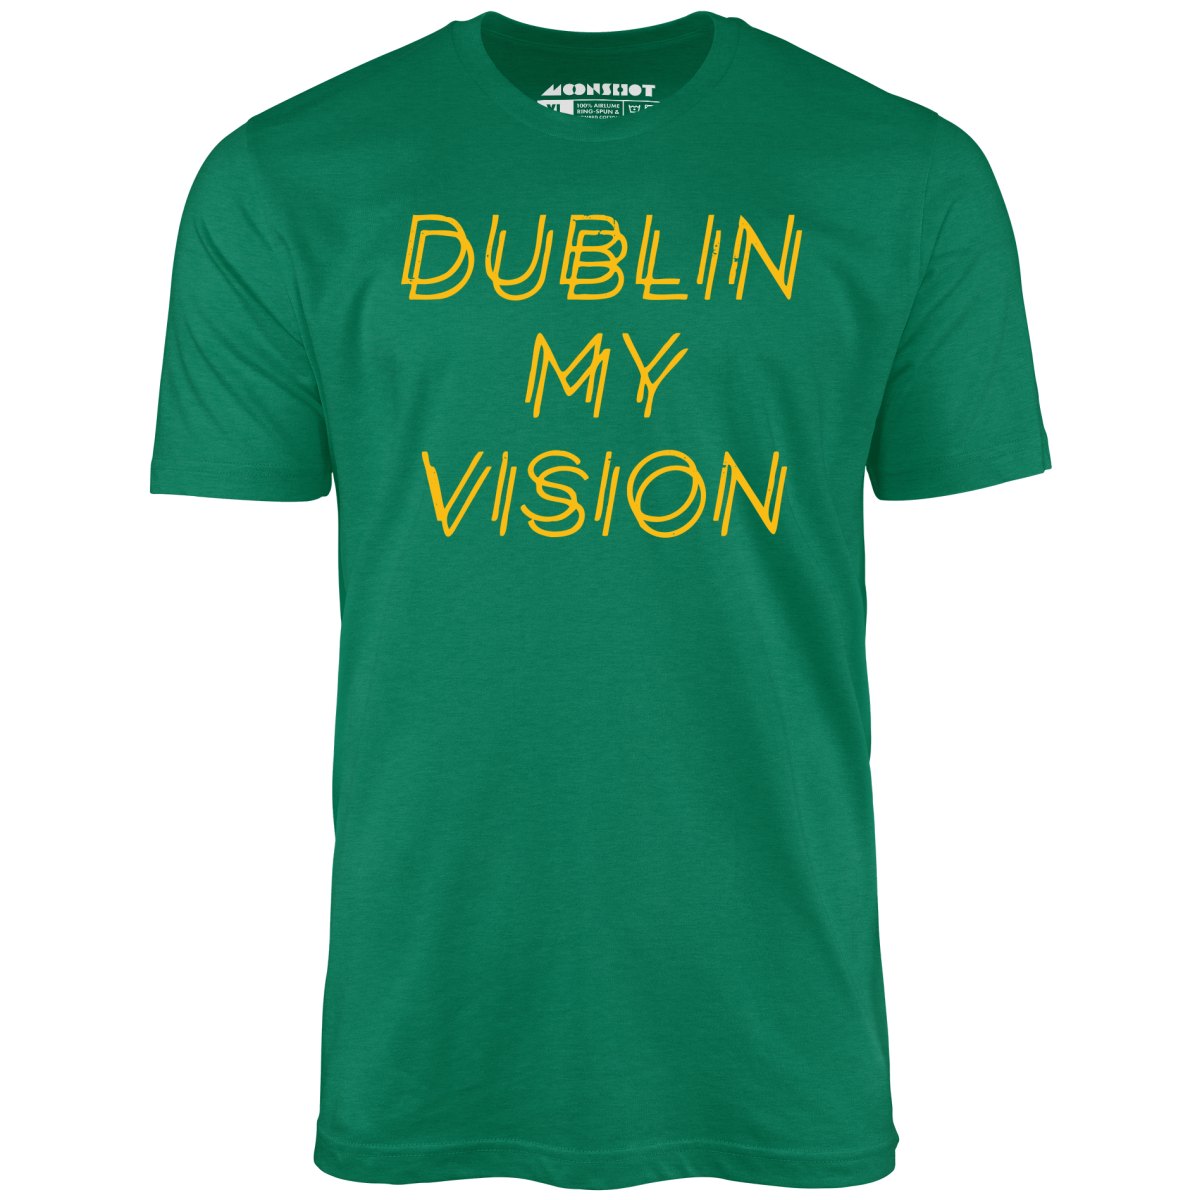 Dublin My Vision - Unisex T-Shirt